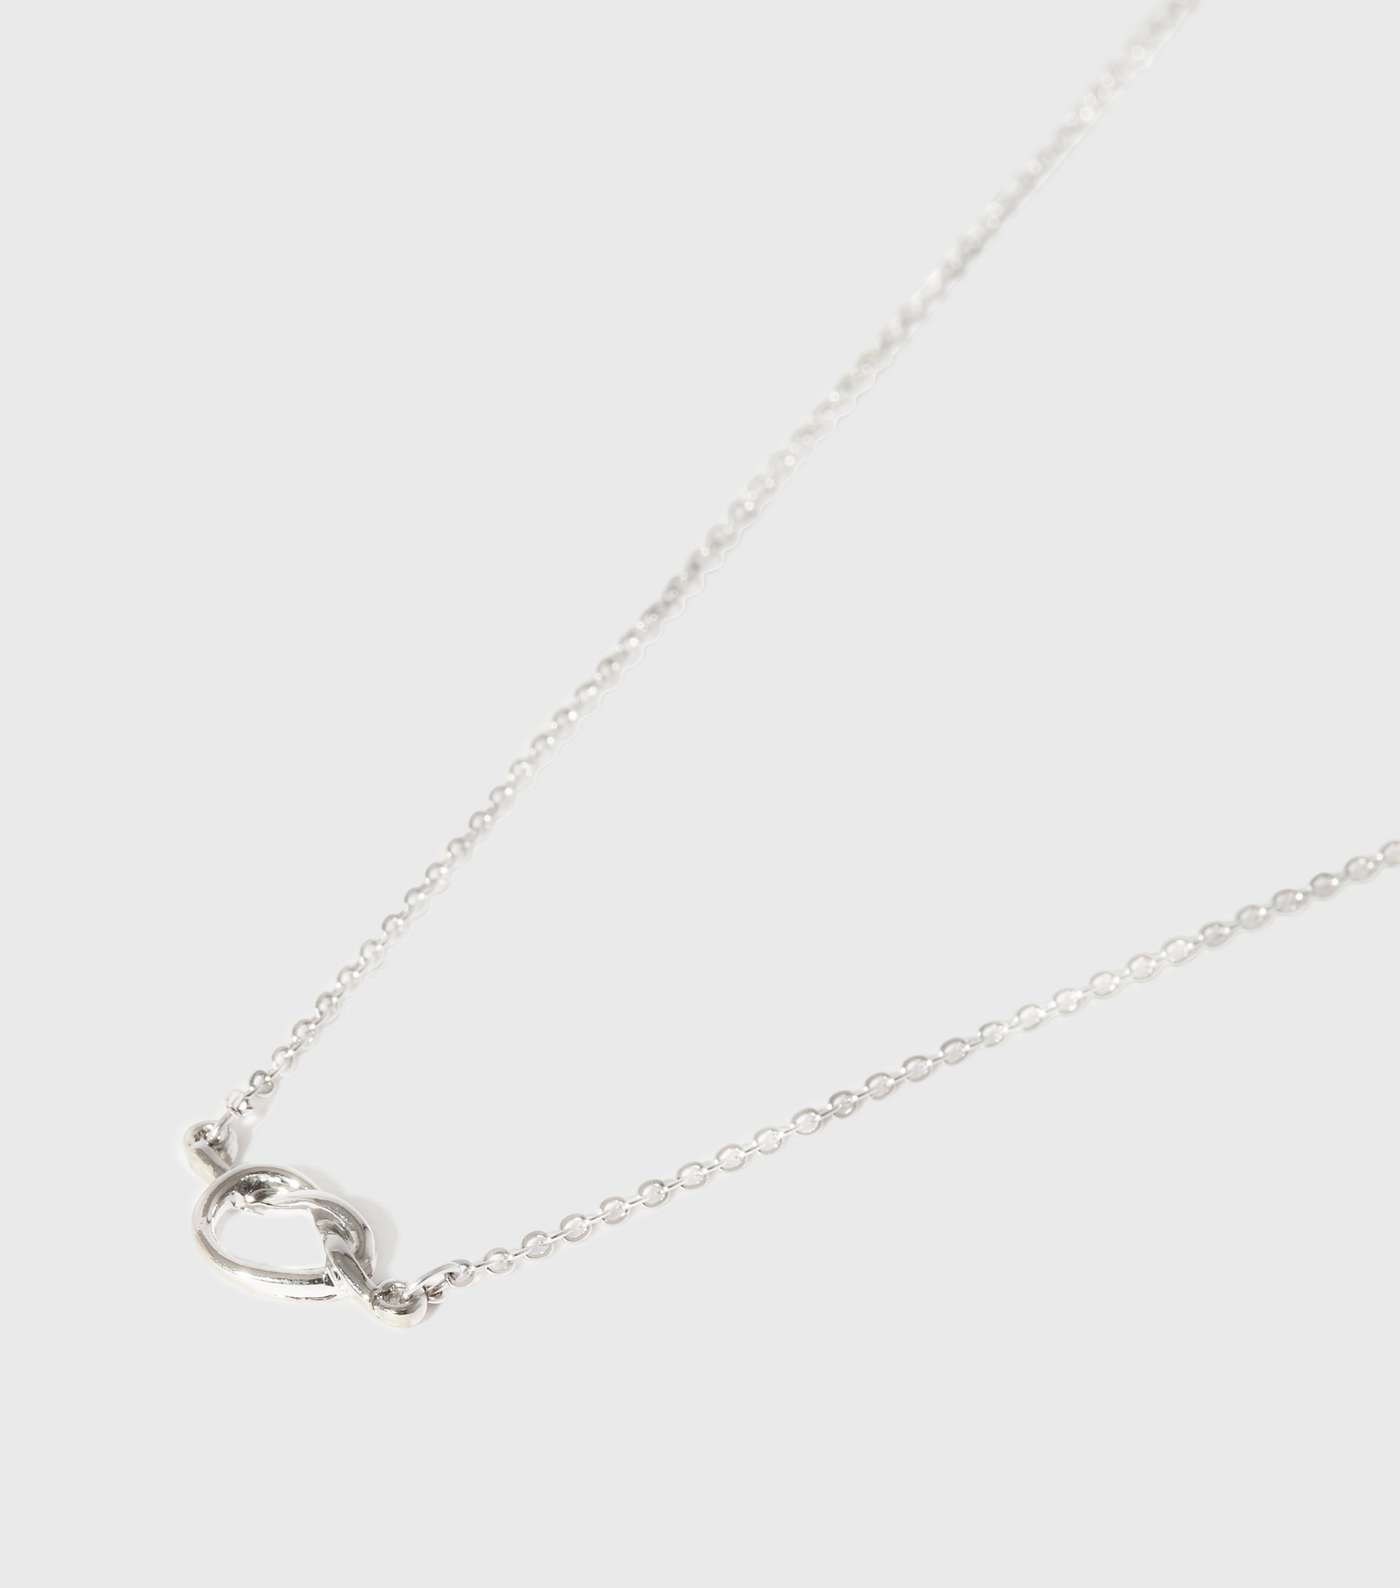 Silver Friendship Knot Pendant Necklace Image 3